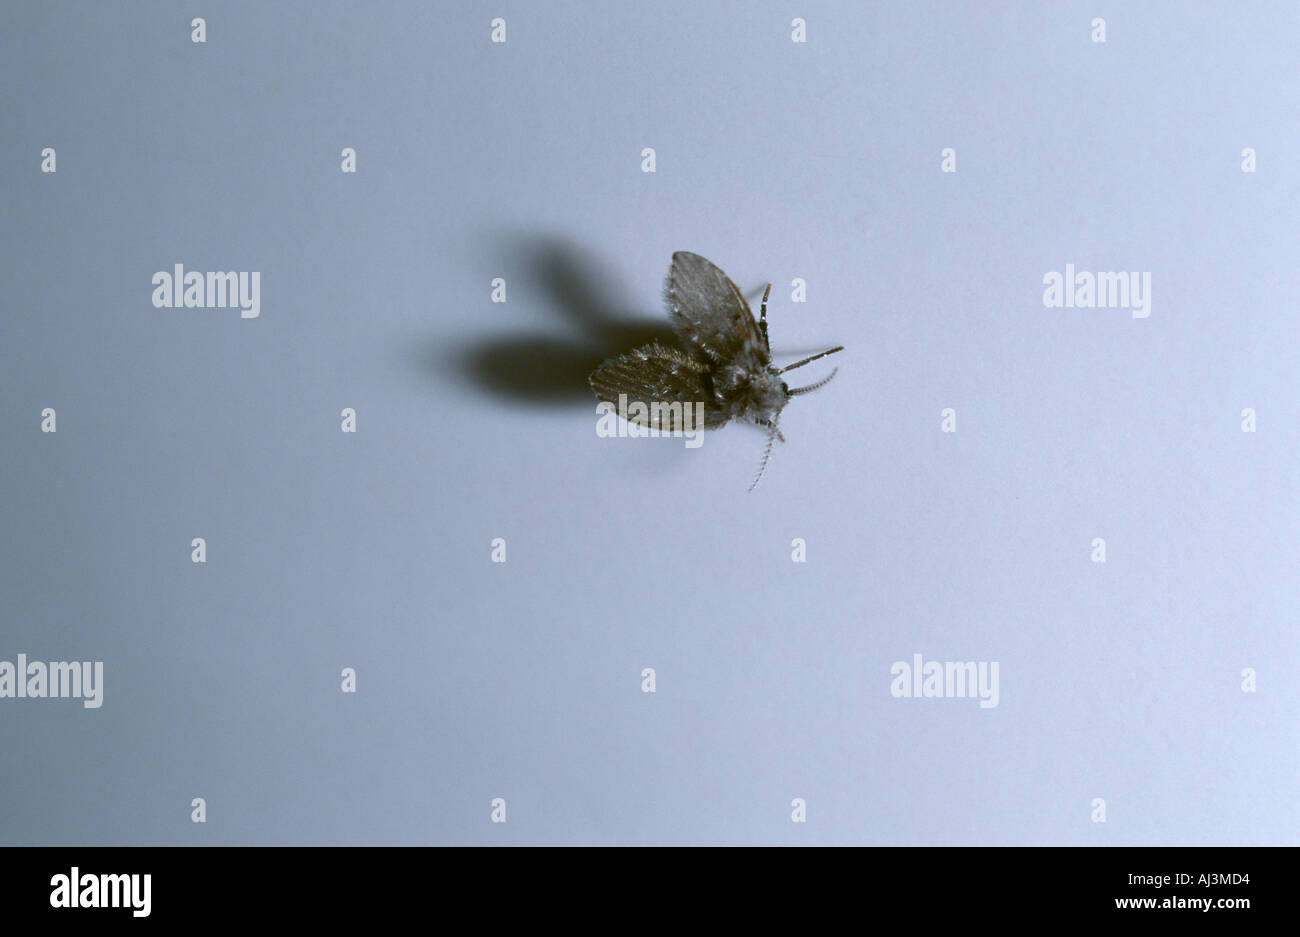 Drain fliegen (Psychoda Alternata) aka Toilette fliegen oder Motten fliegen  Stockfotografie - Alamy